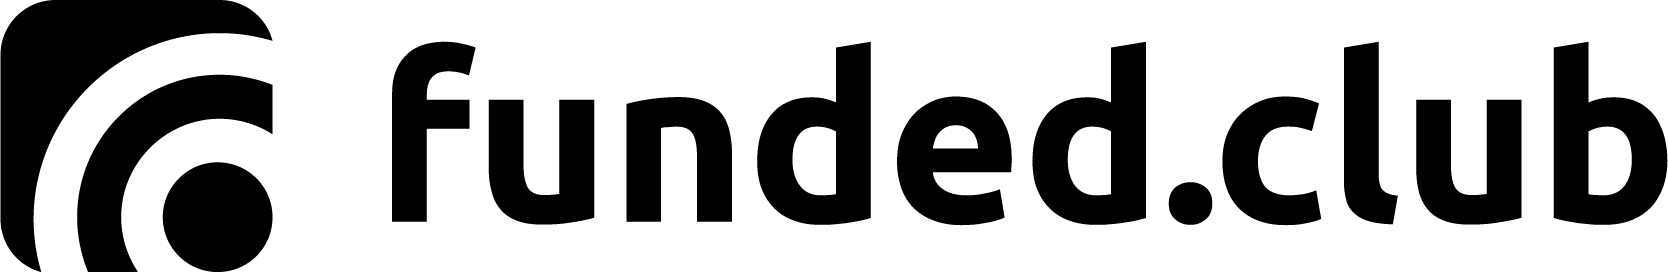 Primary logo black 2022